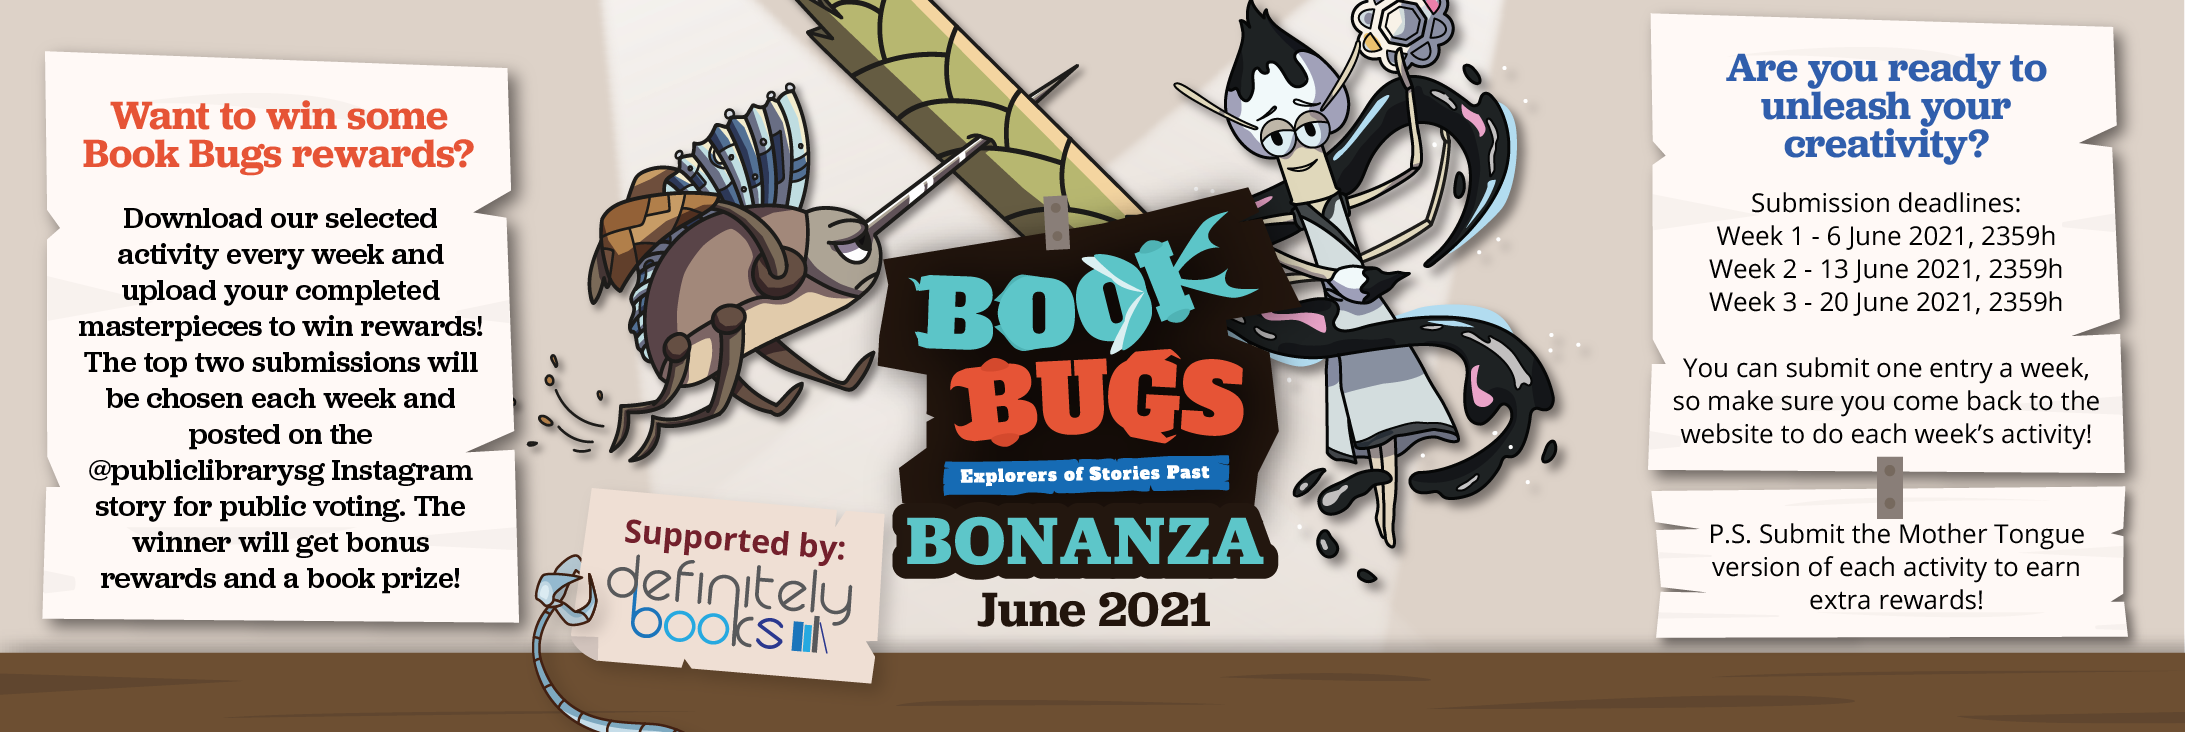 Book Bugs Bonanza June 2021